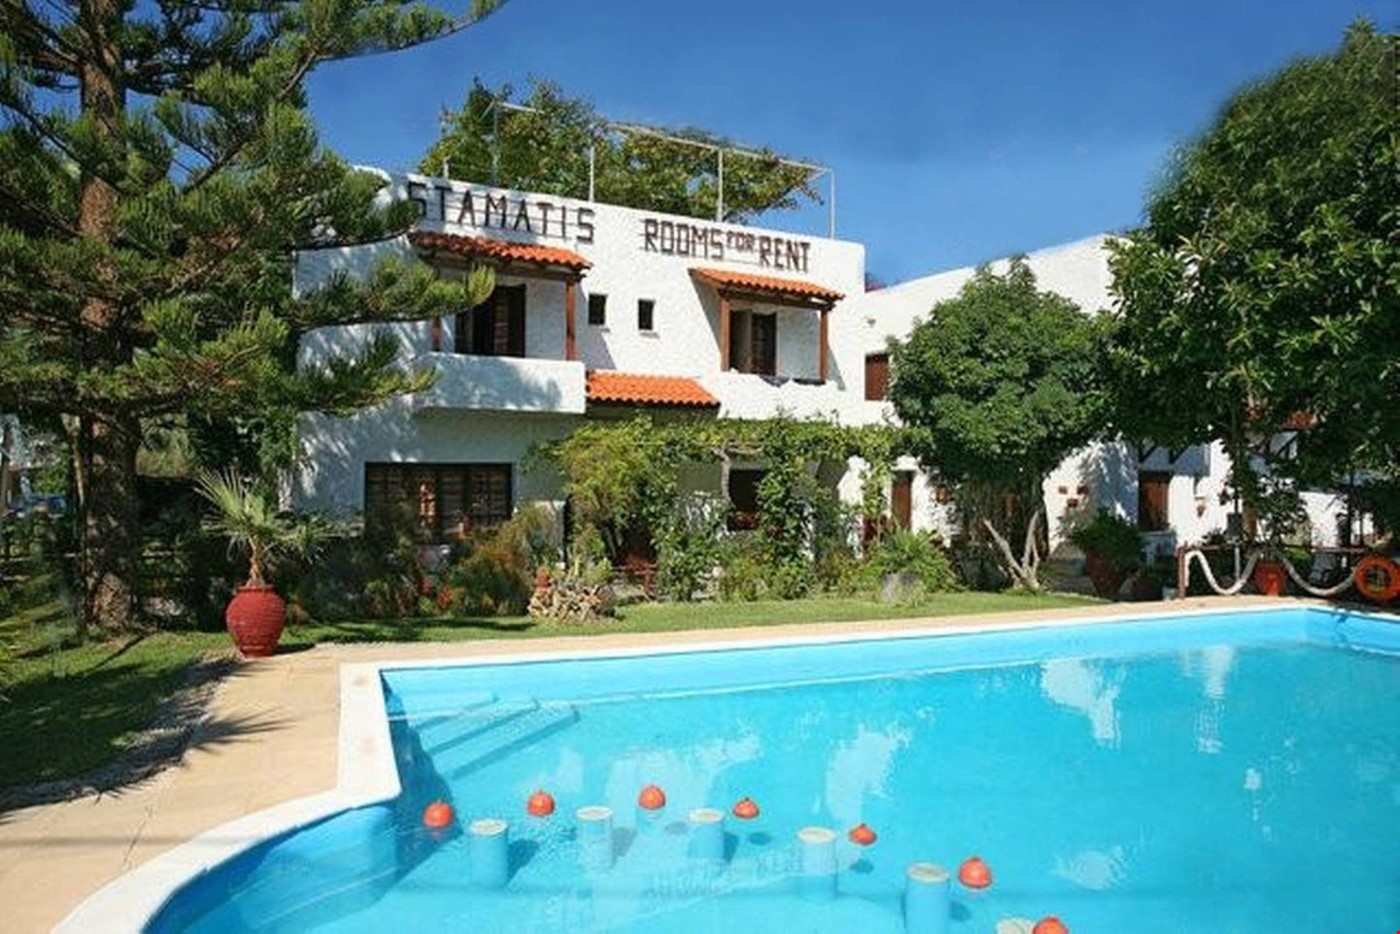 Hotel Pirgos Psilonerou, Platanias, Crete, Chania, Greece nomad remote 16964444-0cdd-449b-a780-98c81ab7230c_Front View 19.jpg